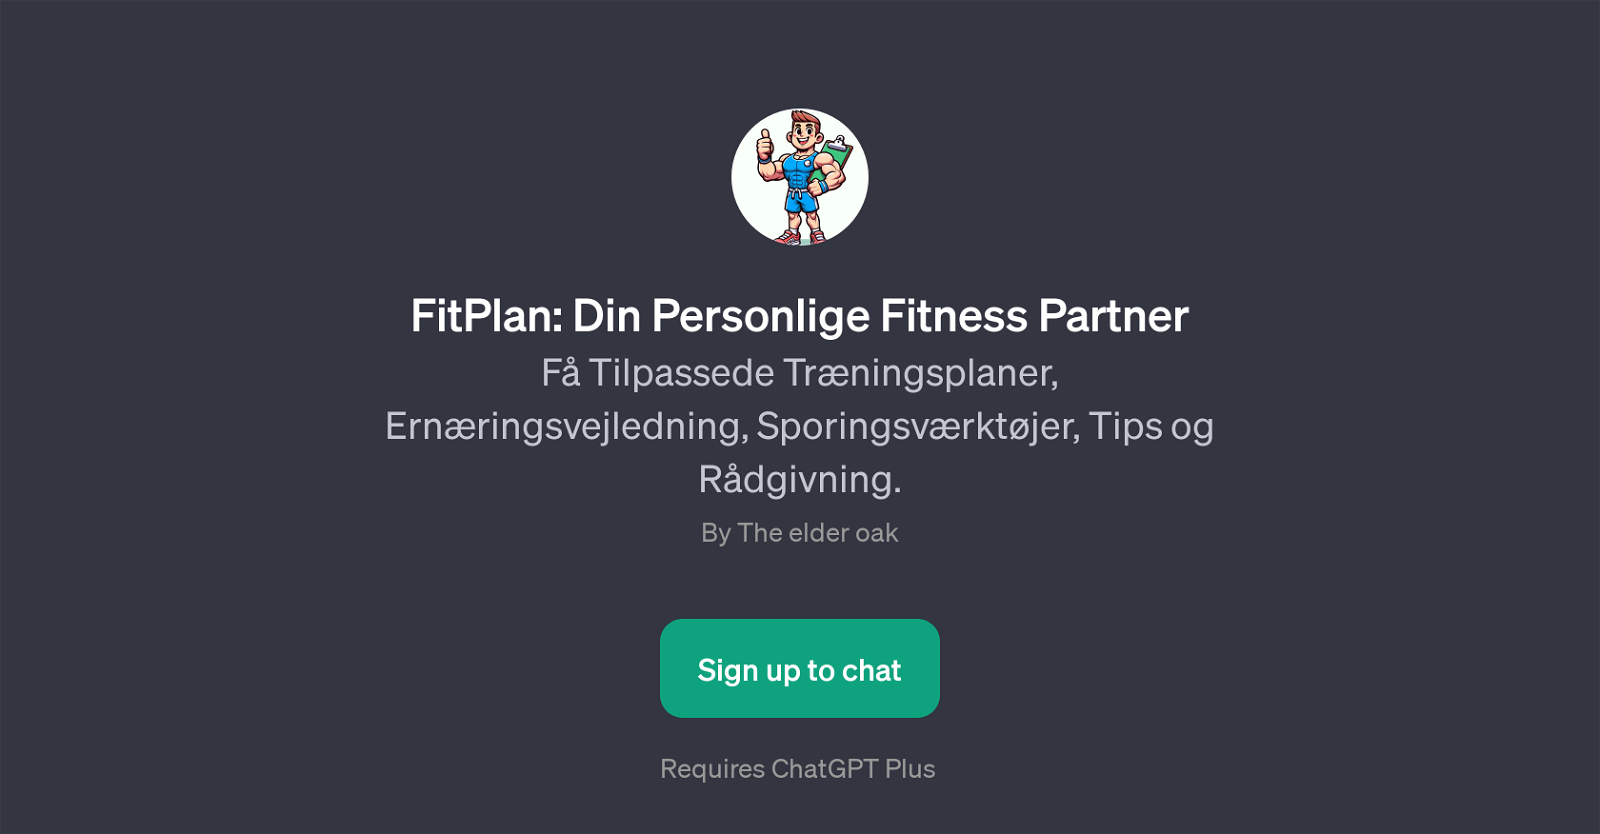 FitPlan: Din Personlige Fitness Partner website